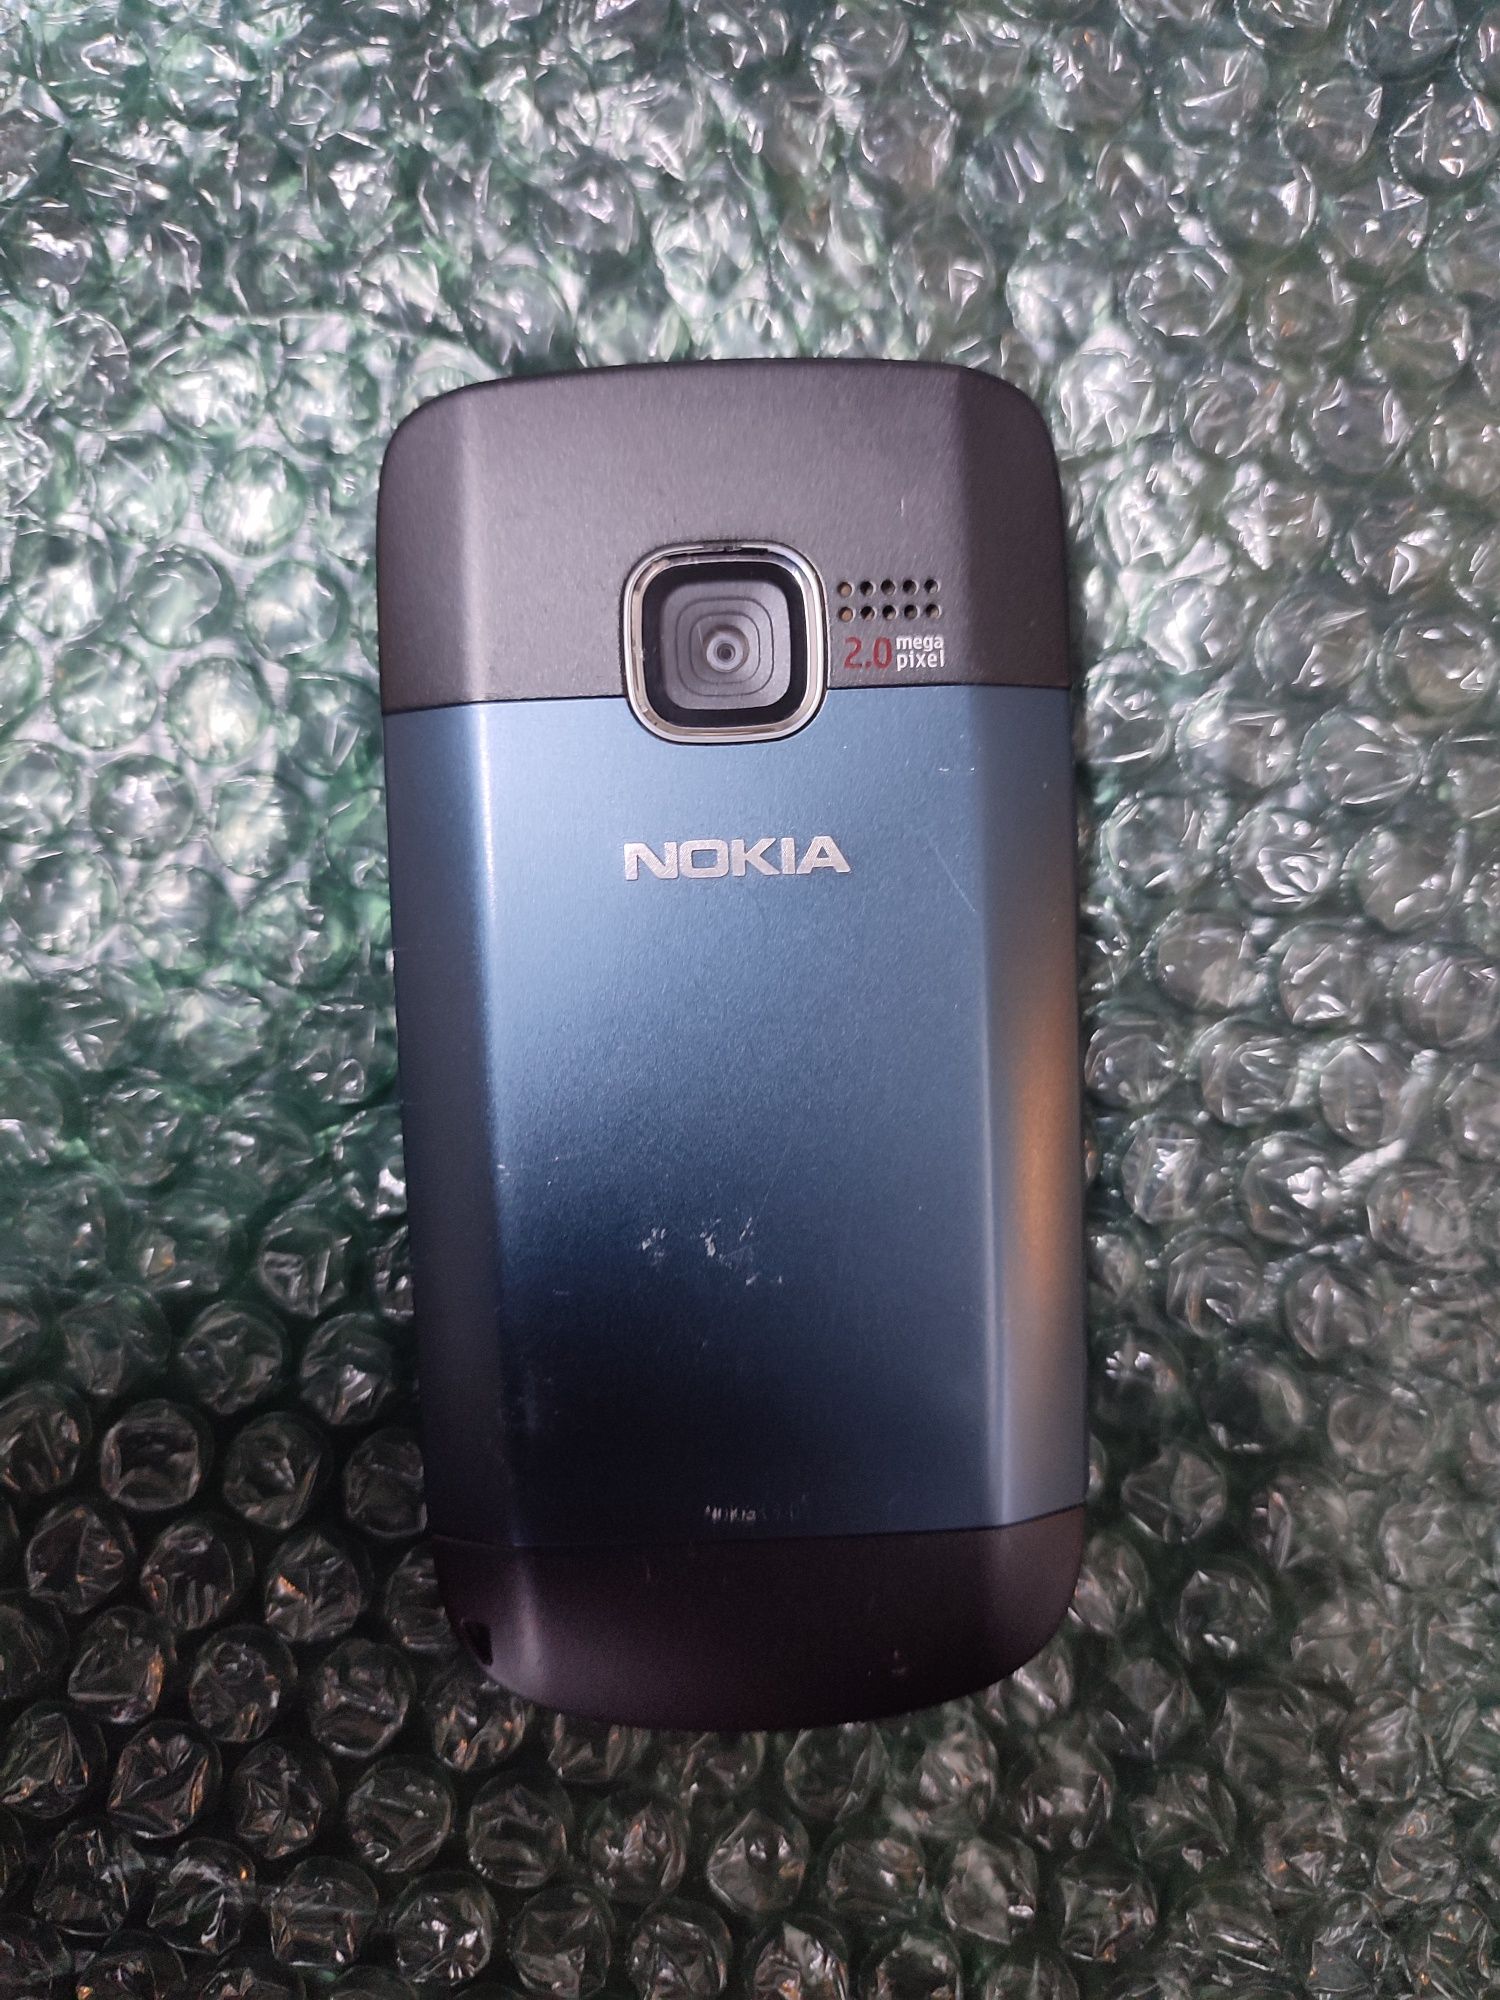 Nokia e63 & Nokia c3